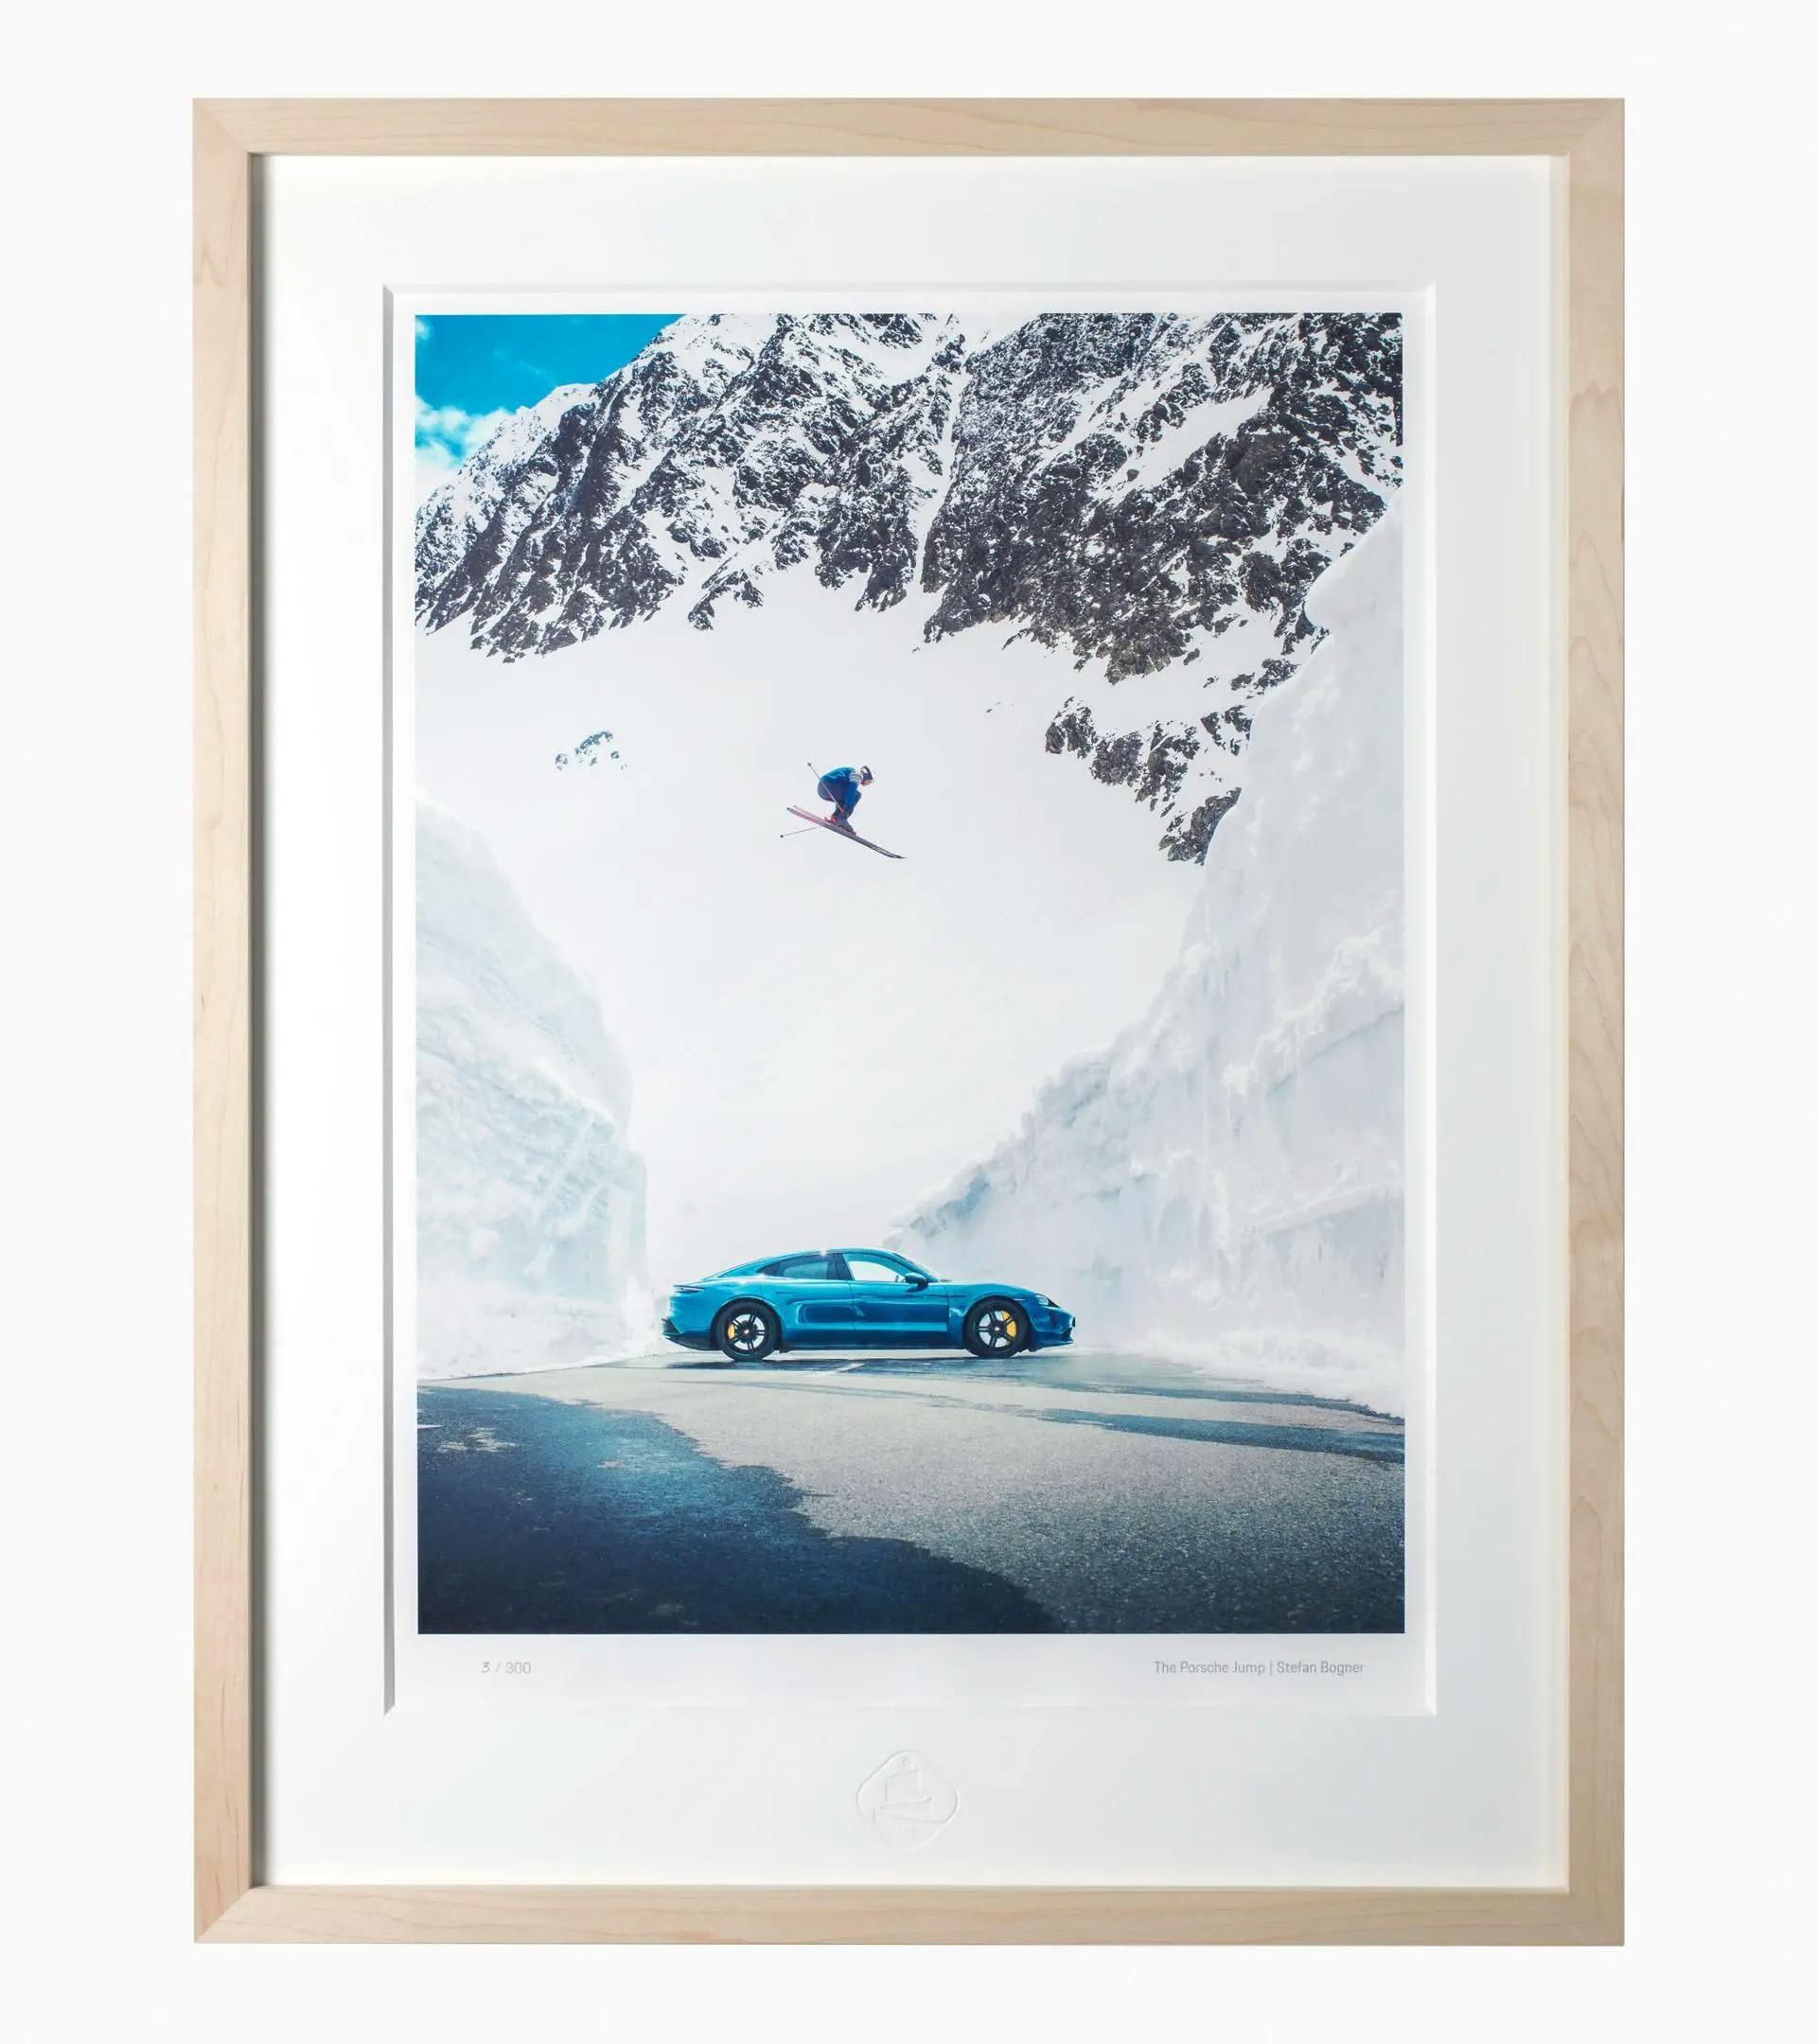 'The Porsche Jump' image set 3